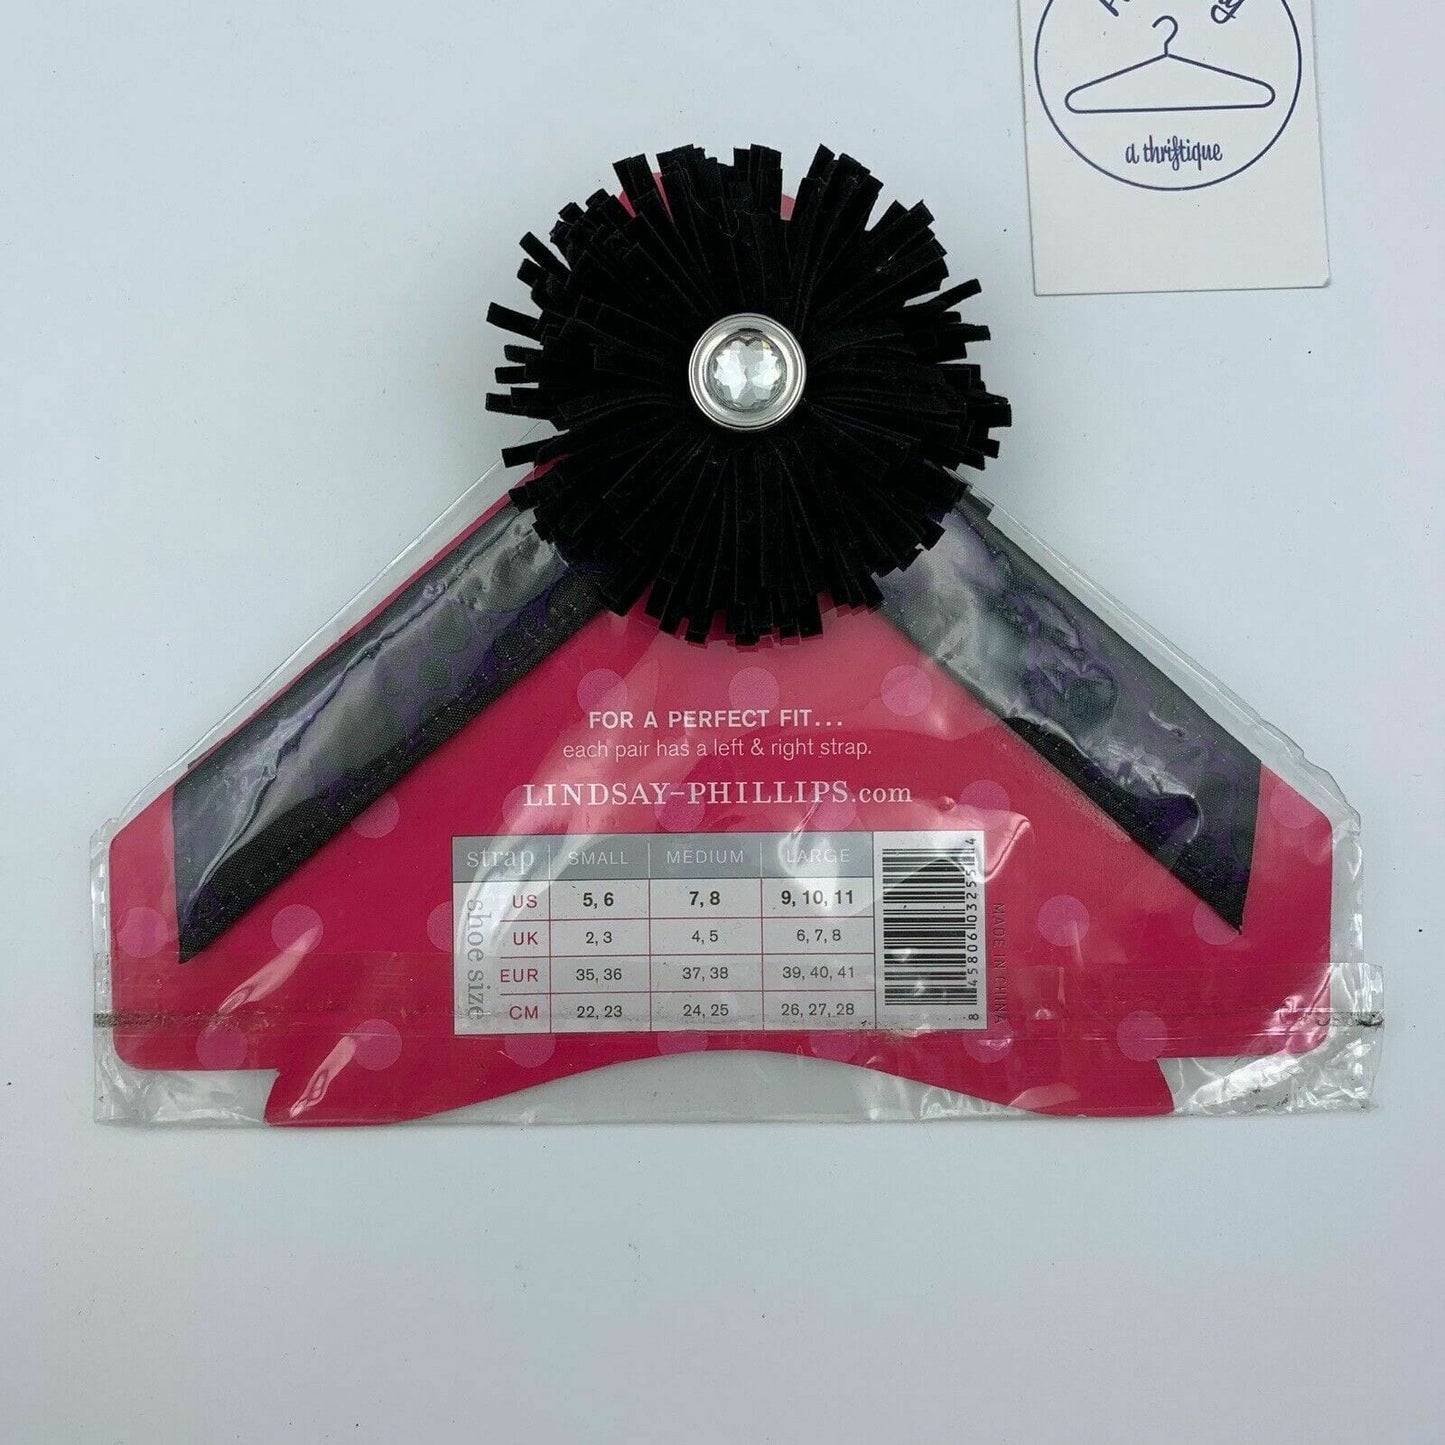 NEW Lindsay Phillips Switchflops Strap Oliver, Black / Purple Tassled Flower - S